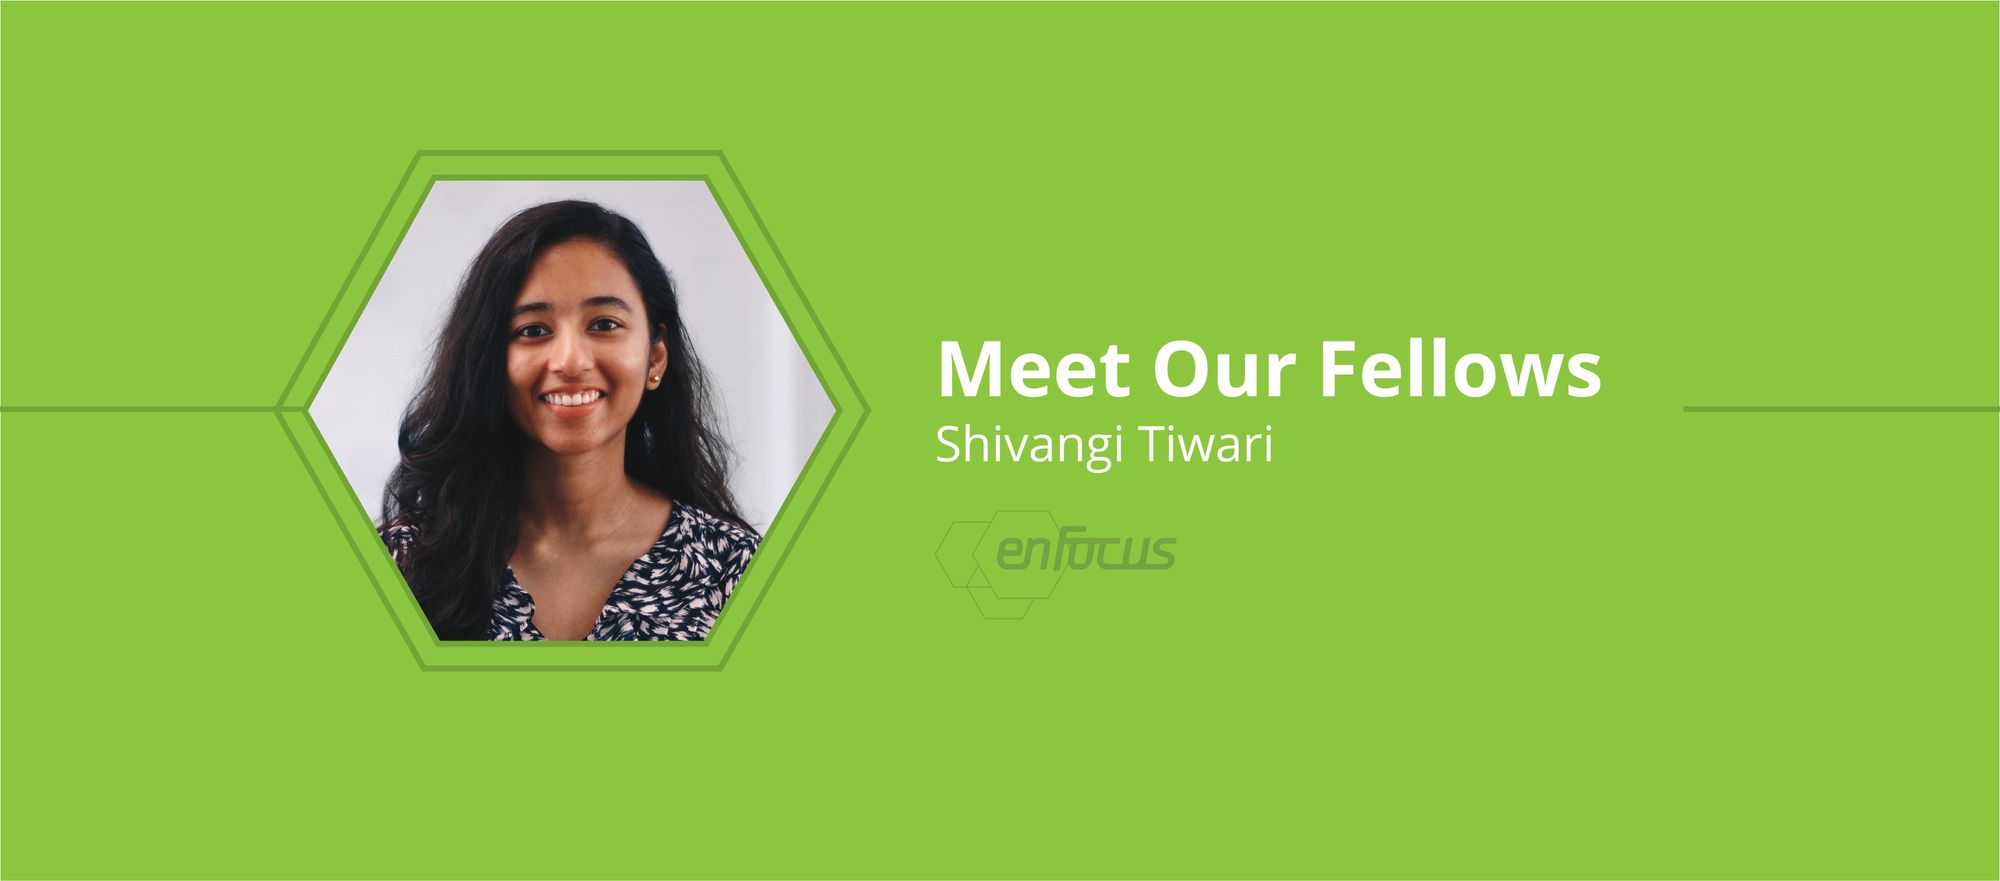 Shivangi Tiwari Using Business Skills for Social Impact